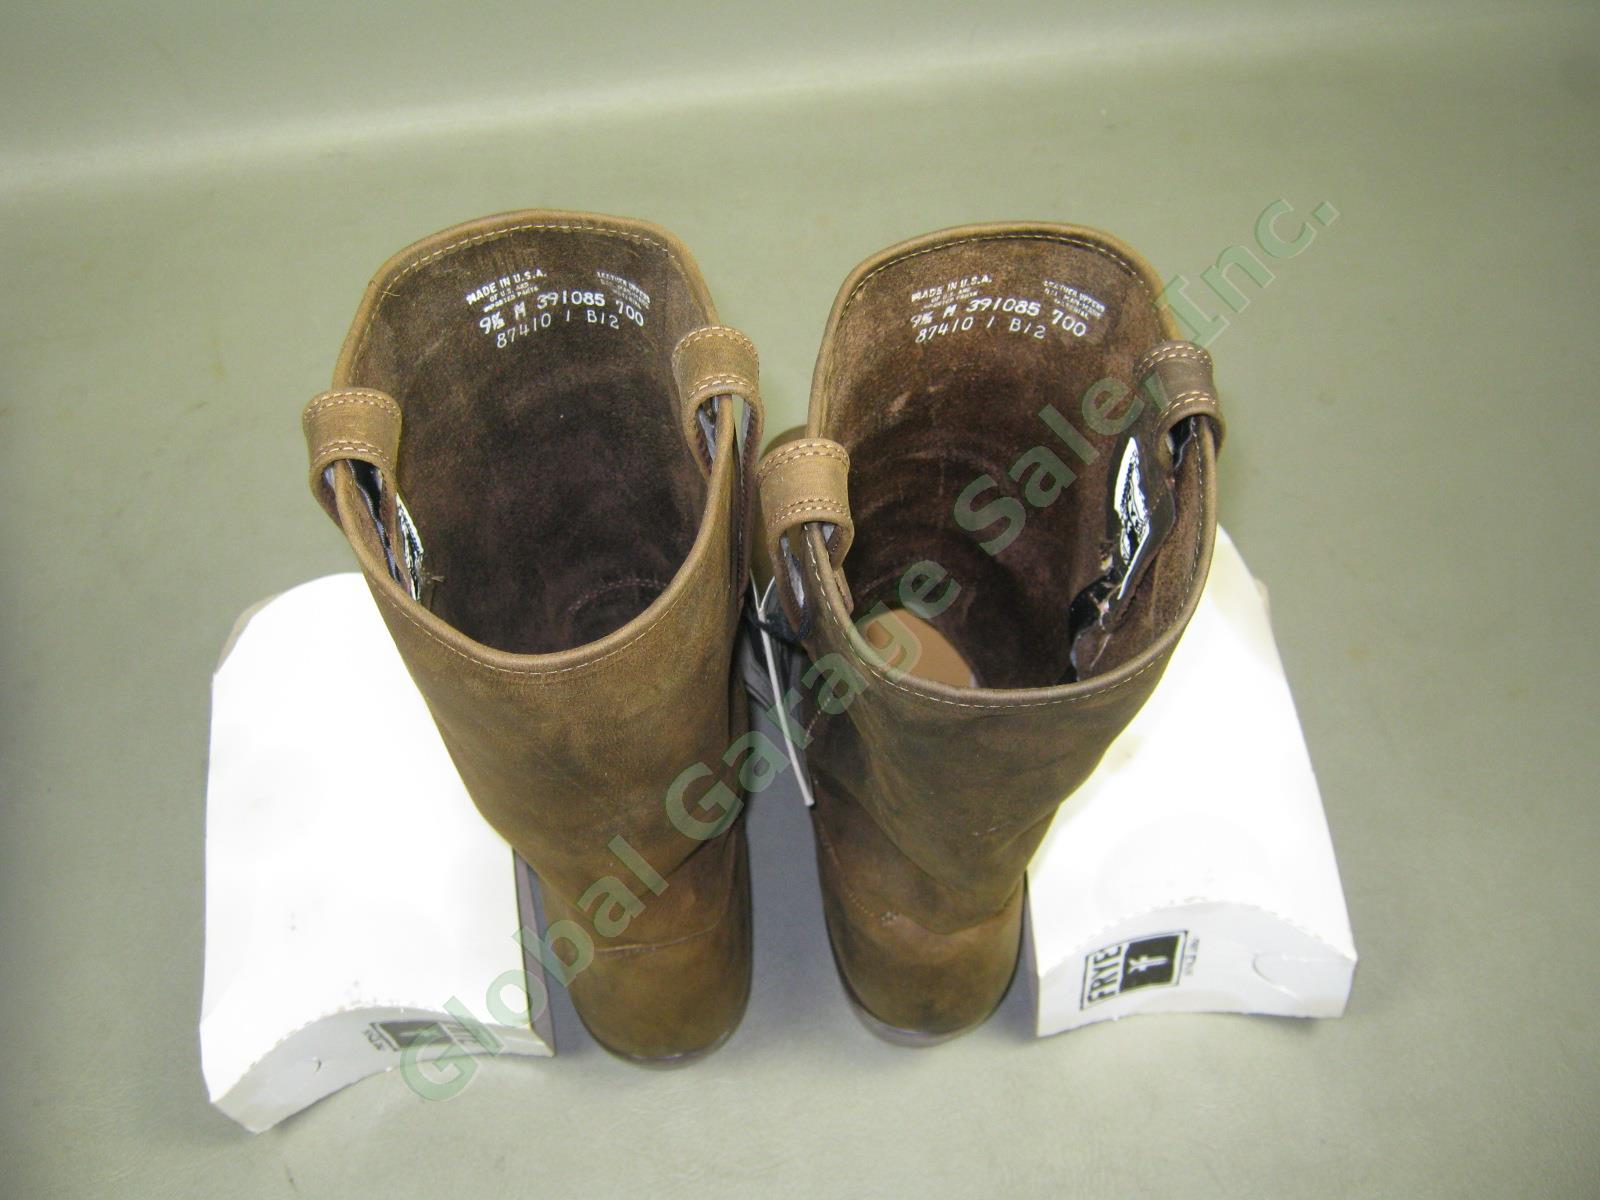 Mens Frye Cavalry 12L Tan Leather Boots Worn Once 9.5 Medium Width W/Box 87410-1 7